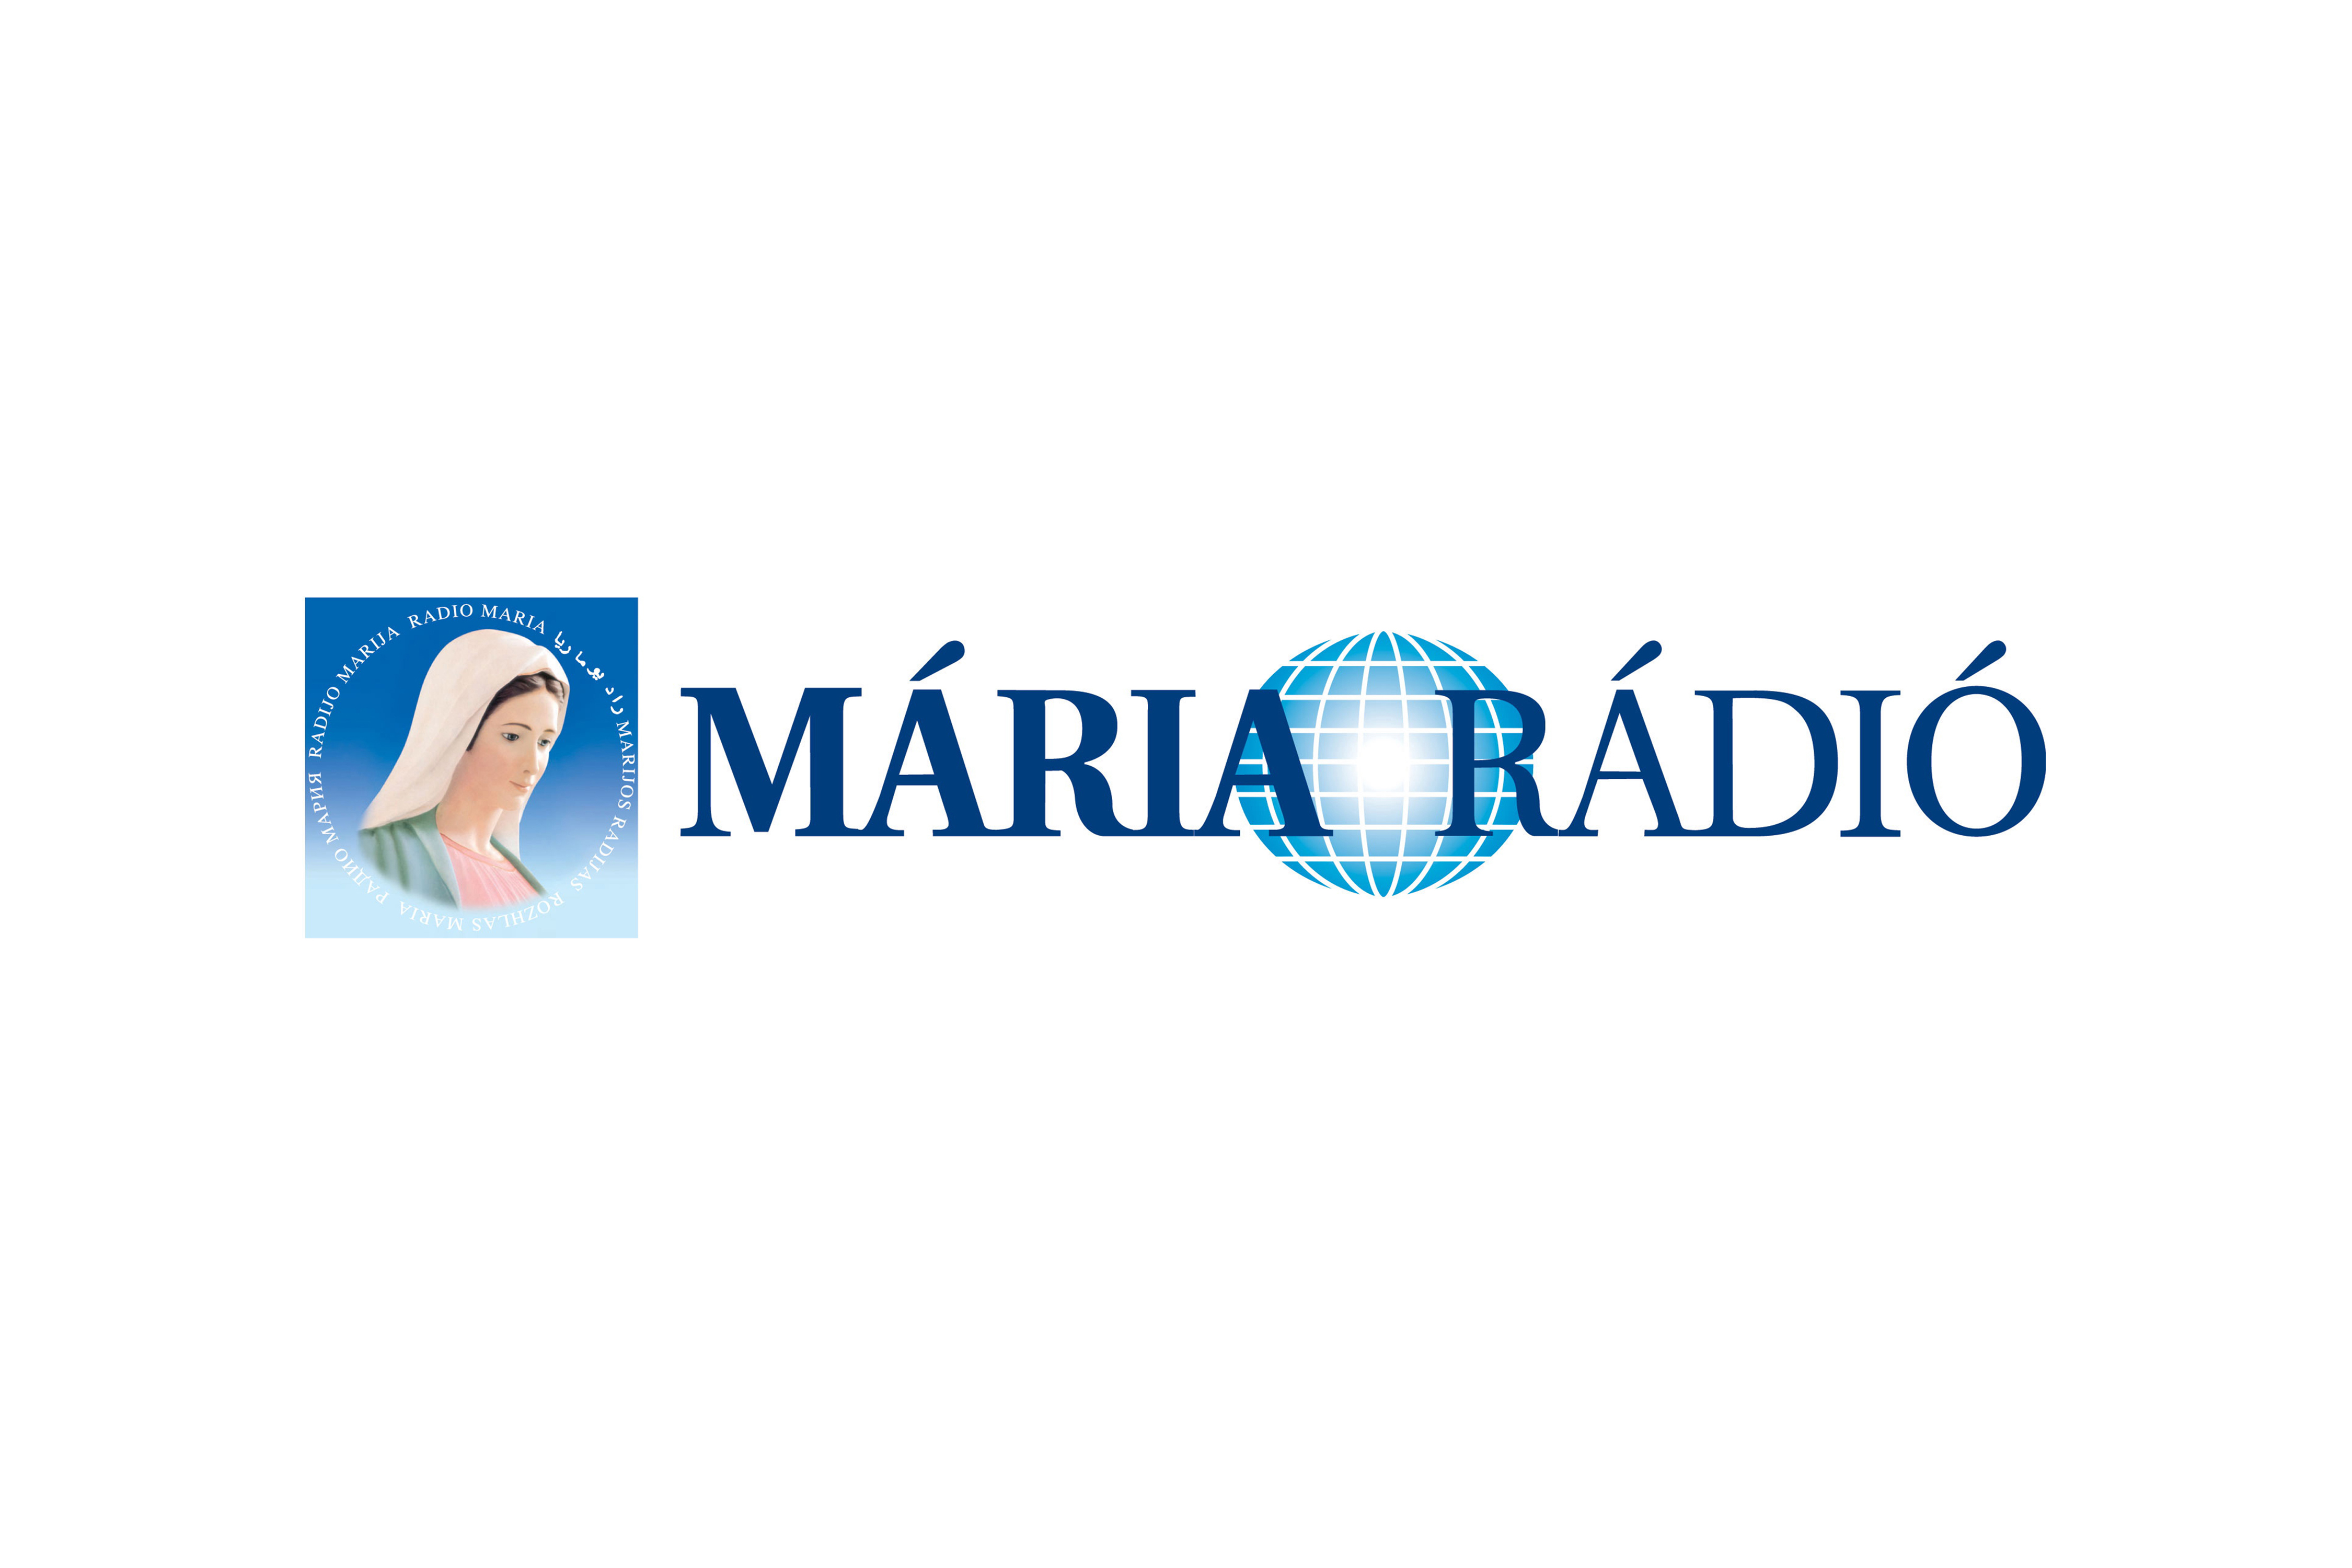 Maria radio 3x2